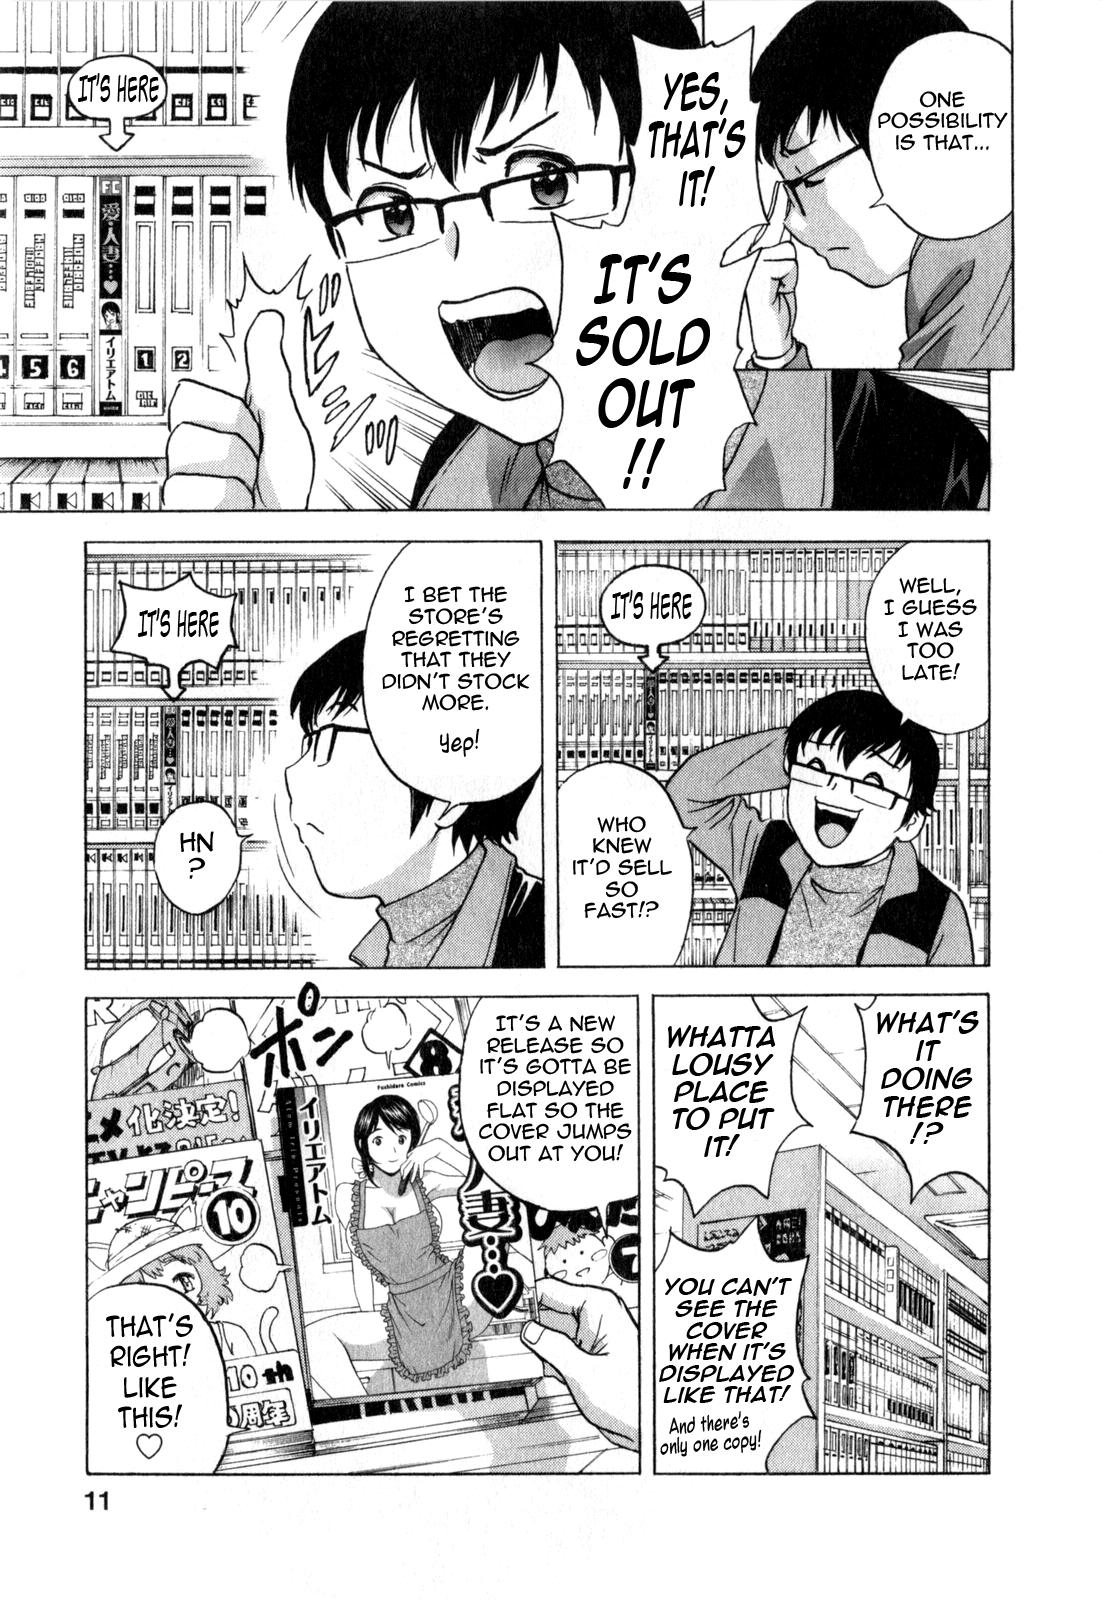 [Hidemaru] Life with Married Women Just Like a Manga 3 - Ch. 1-2 [English] {Tadanohito} 12